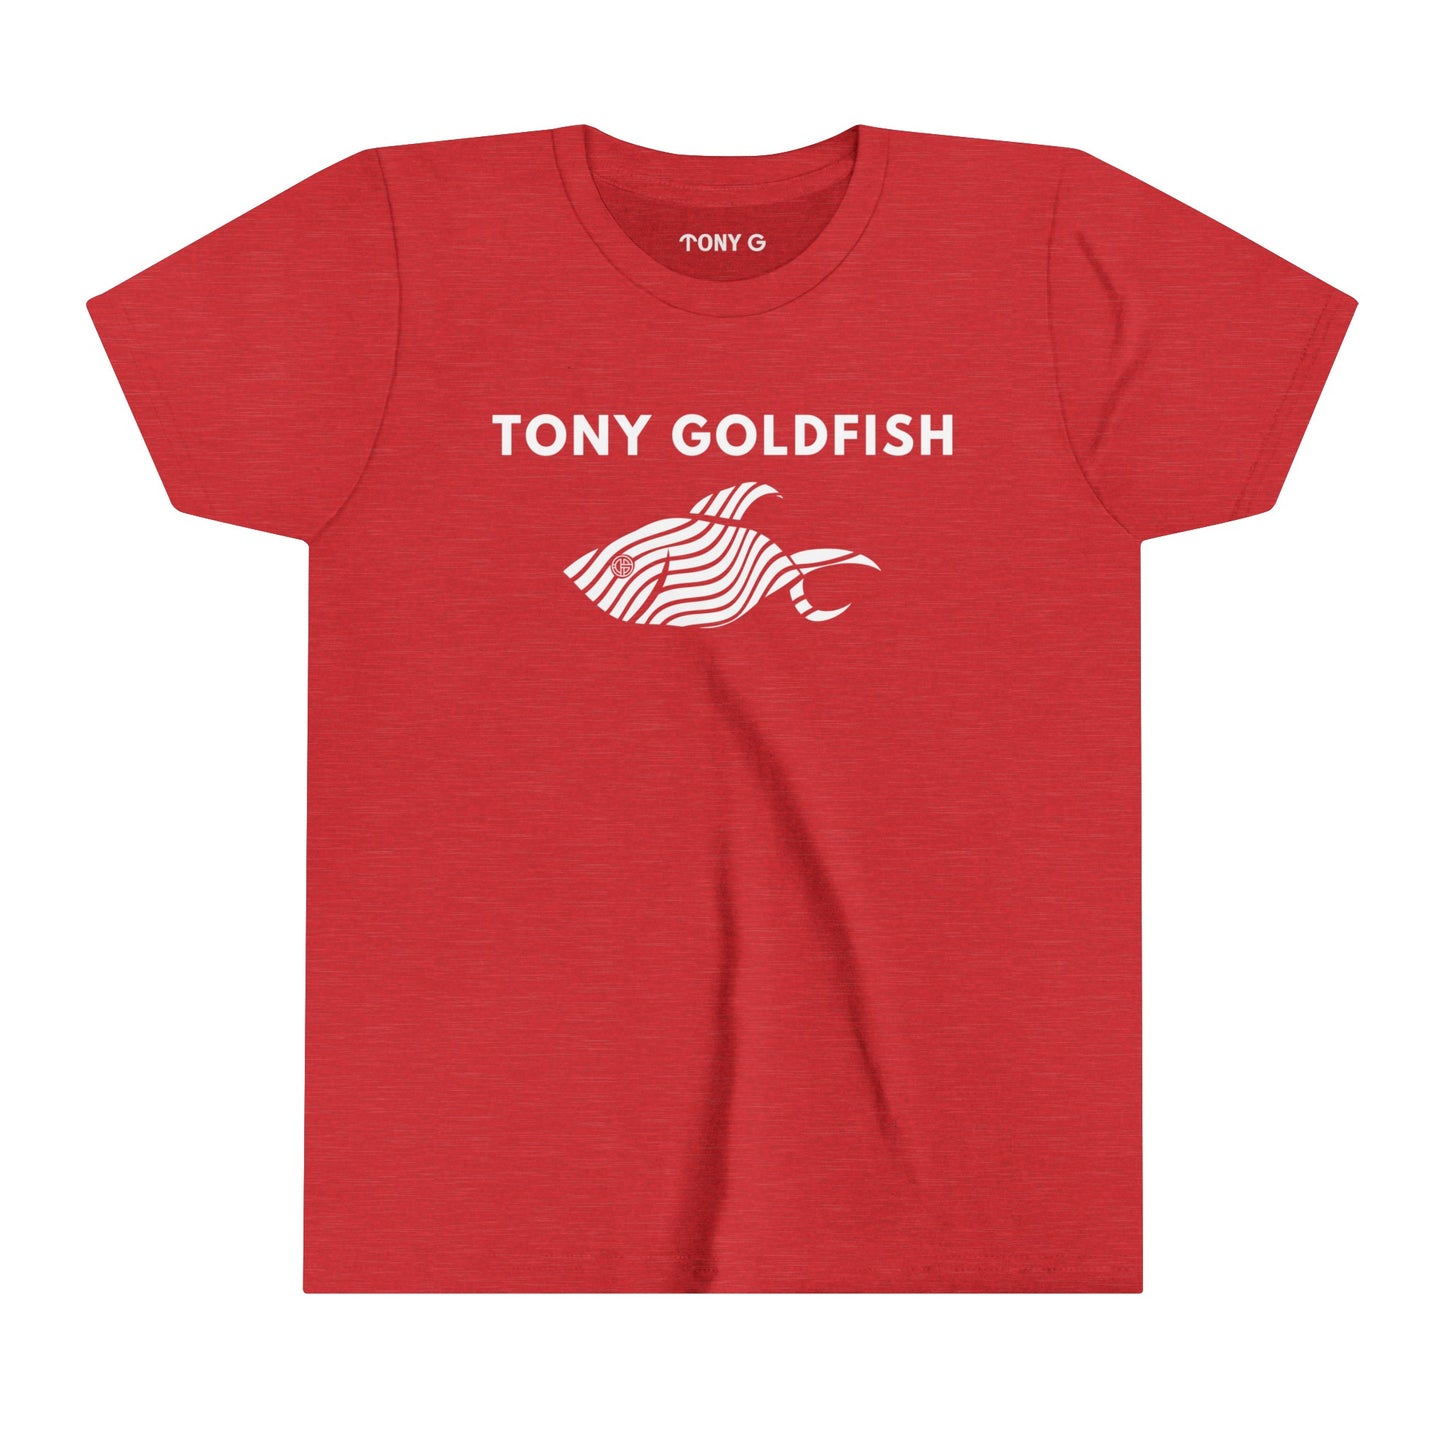 TONY Goldfish Youth Short Sleeve Tee, featuring the TONY Goldfish designs